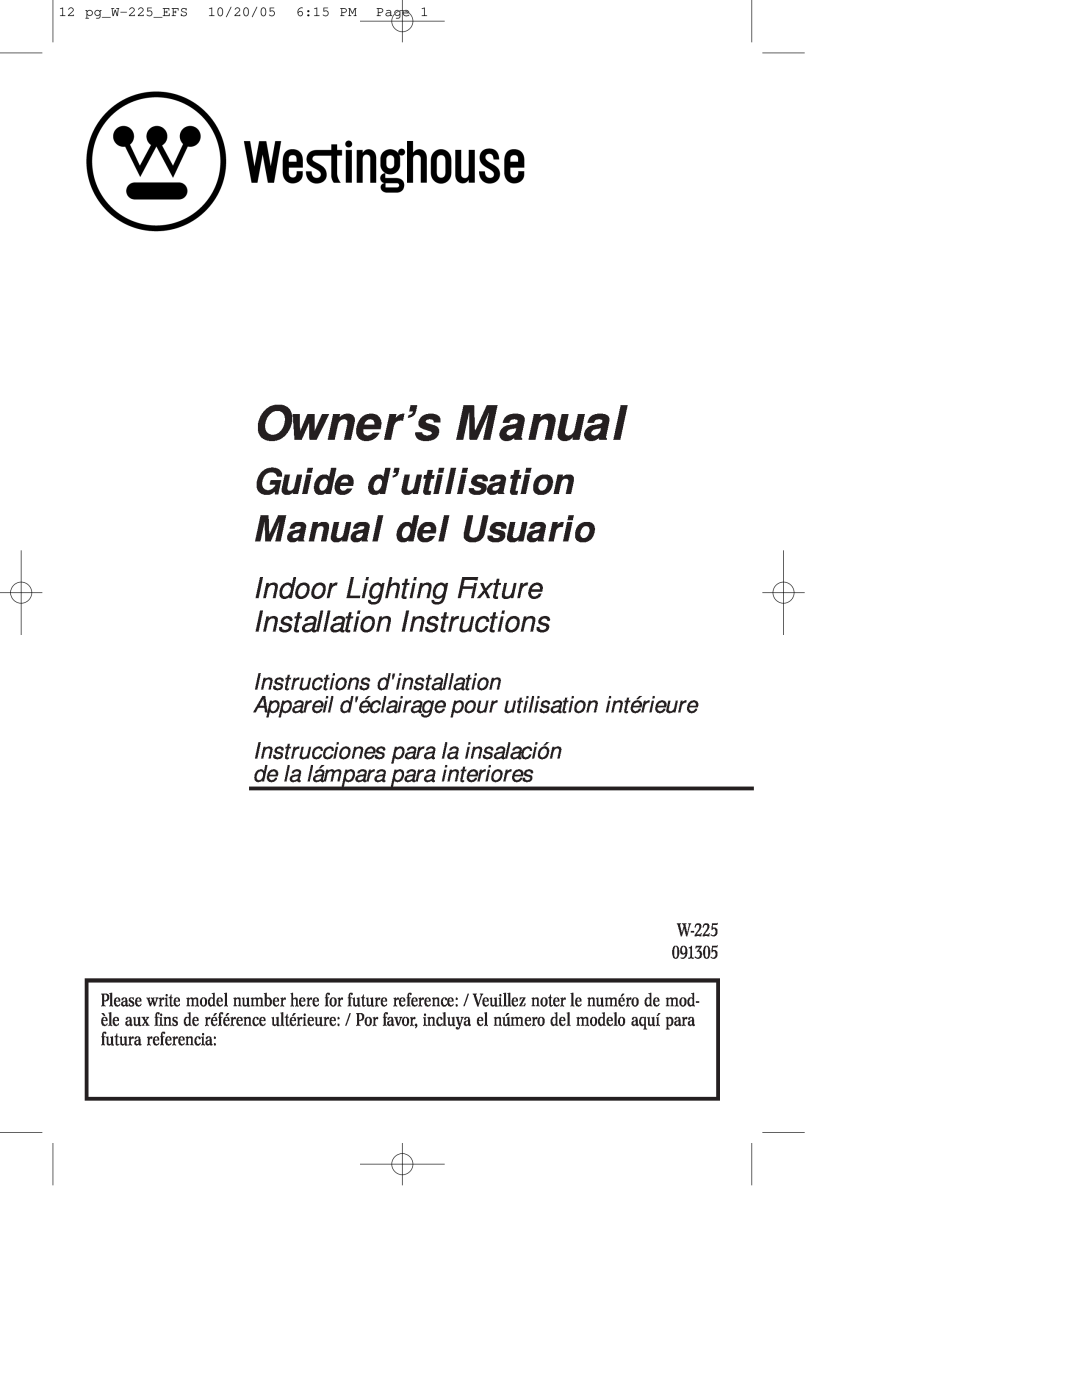 Westinghouse W-225 owner manual Guide d’utilisation Manual del Usuario, Indoor Lighting Fixture Installation Instructions 